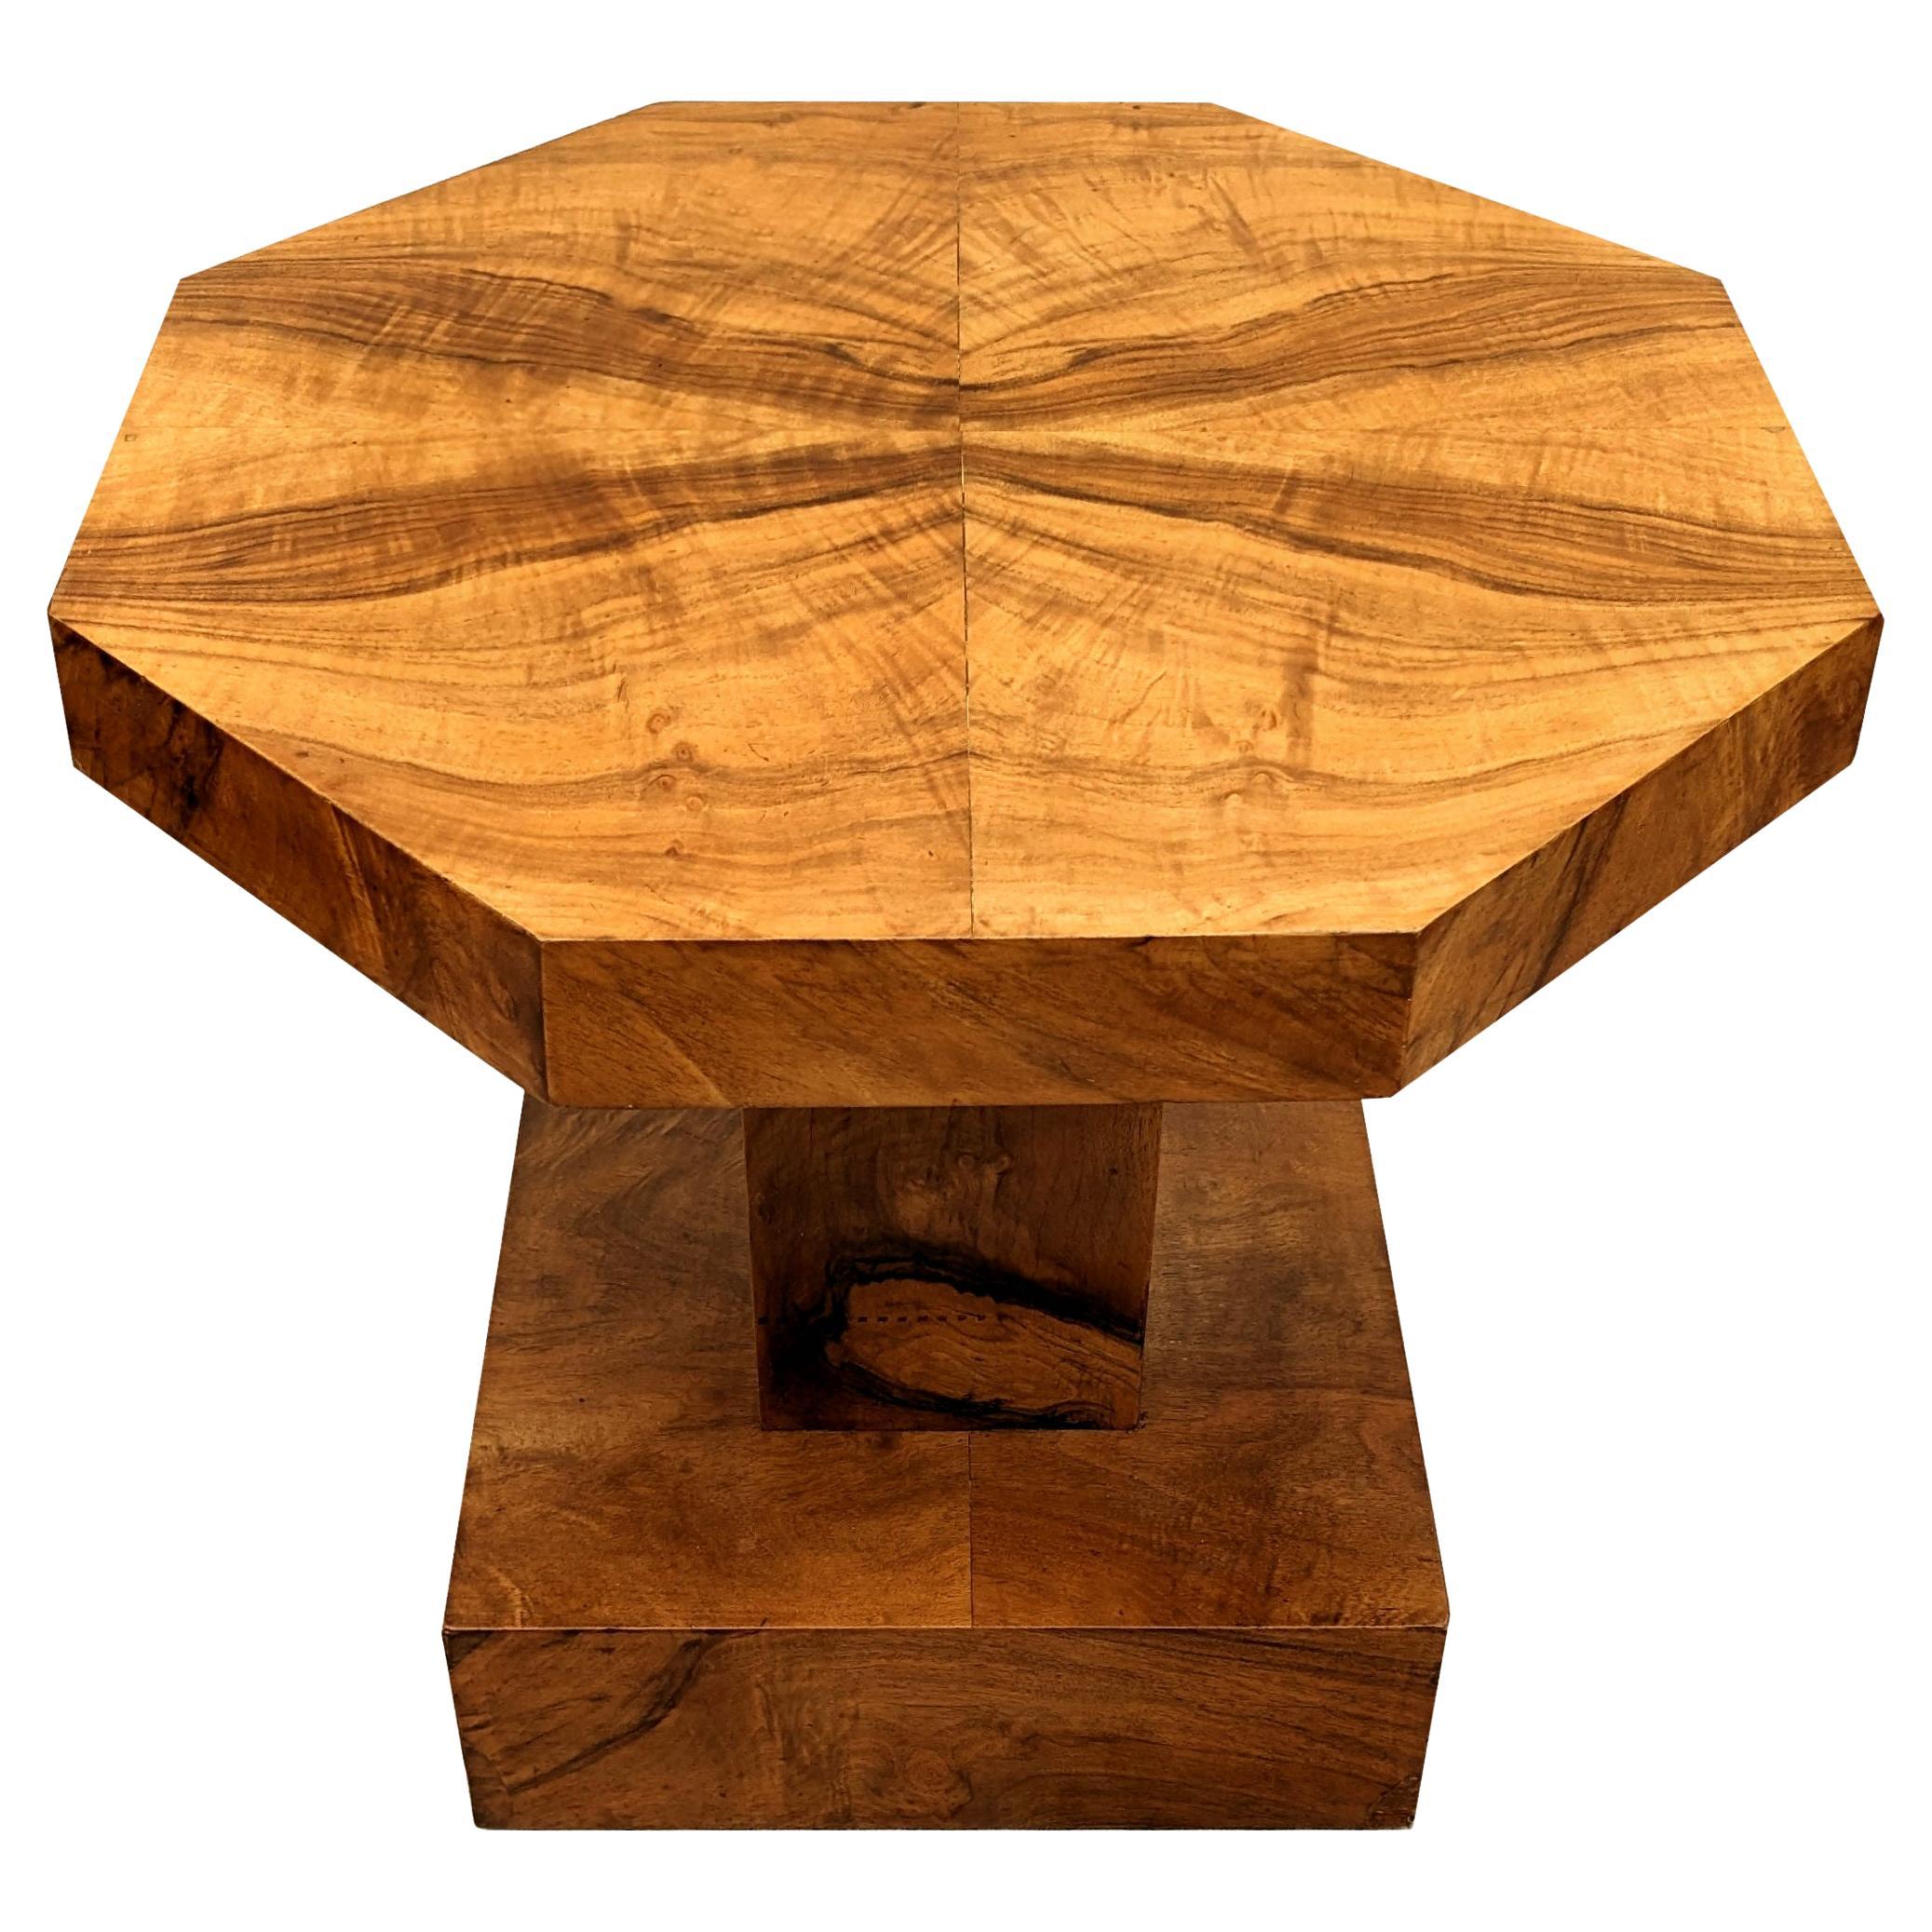 Art Deco Figured Walnut Occasional Table, English, c1930